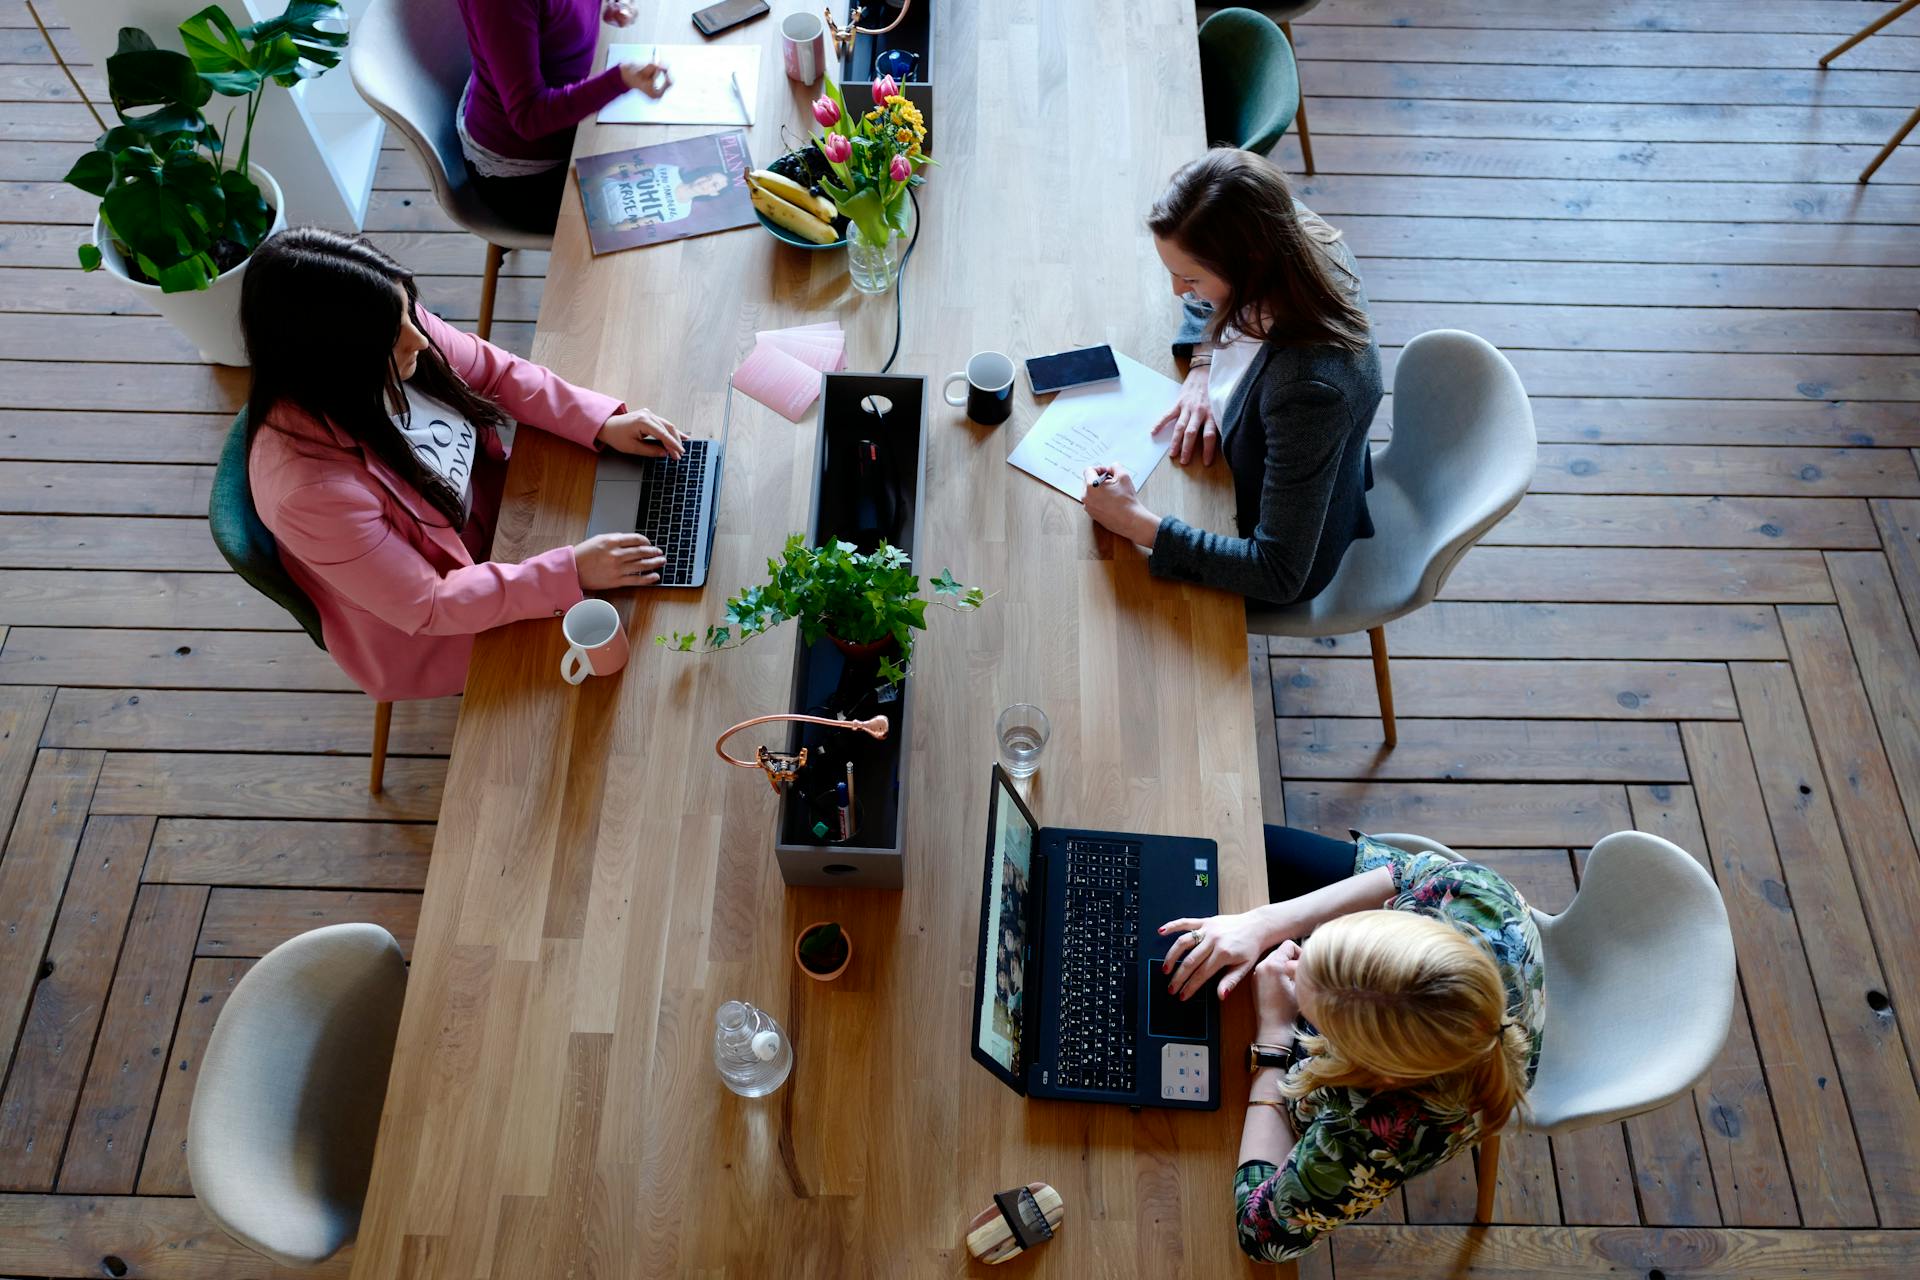 Women working in an office | Source: Pexels